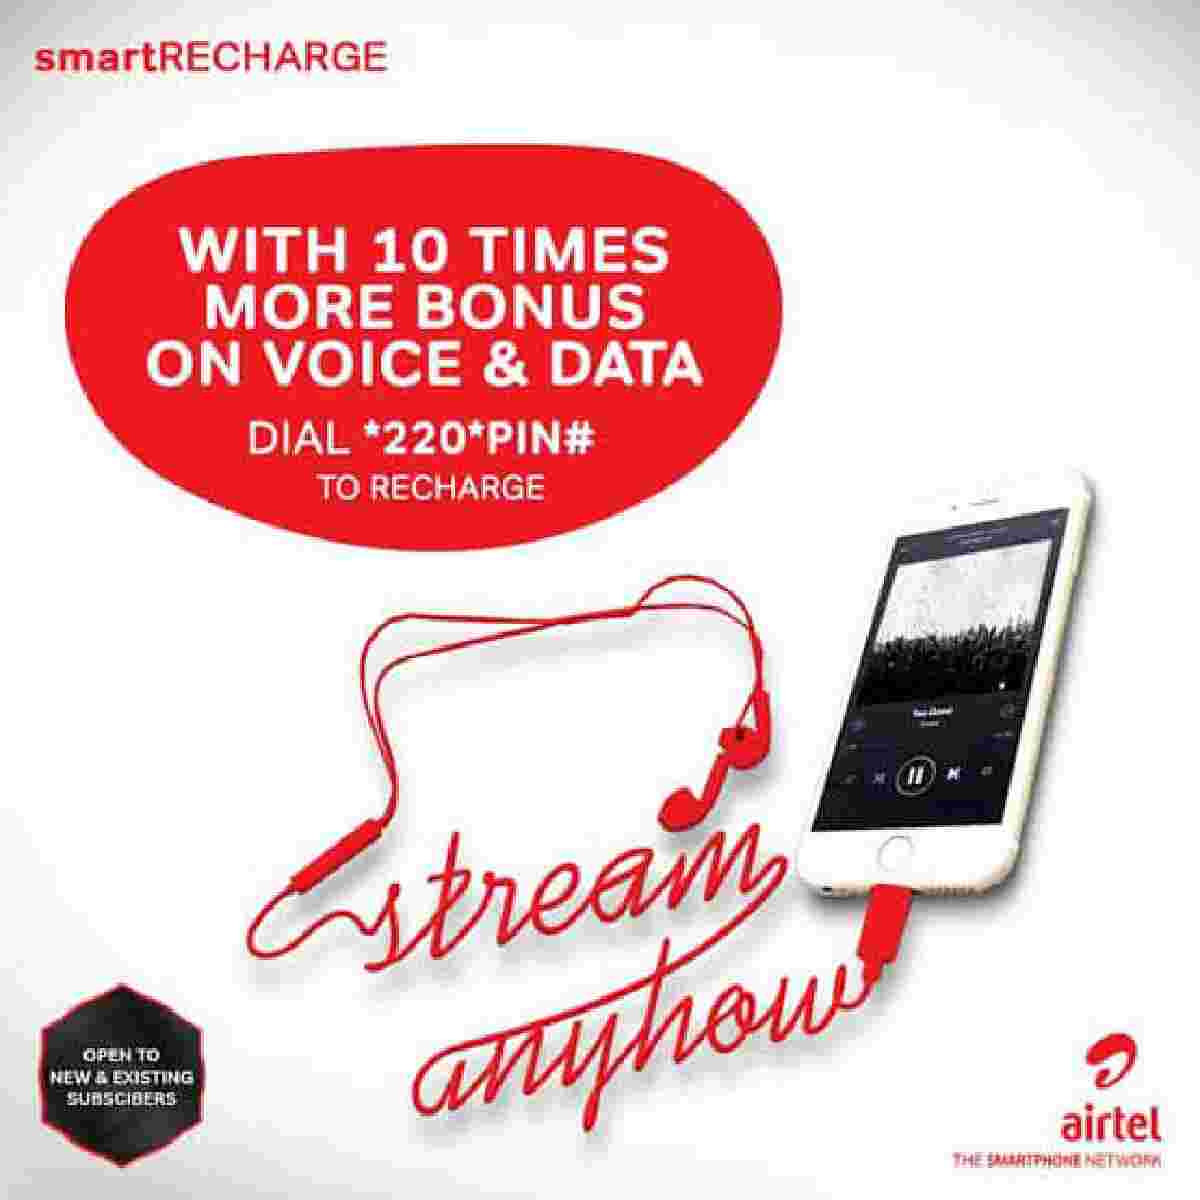 Airtel smart recharge 10x bonus